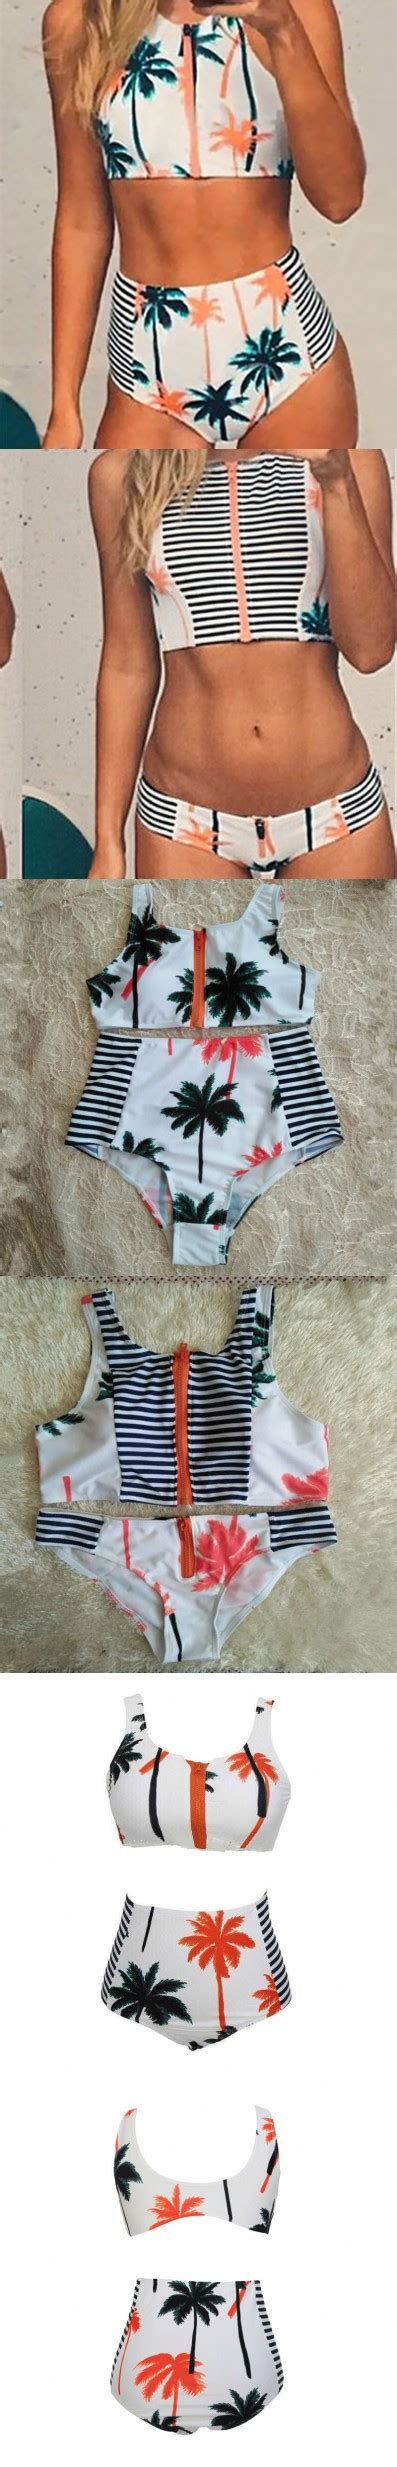 New 2016 Women Vintage Floral Palm Tree Print Bikini Sets High Neck